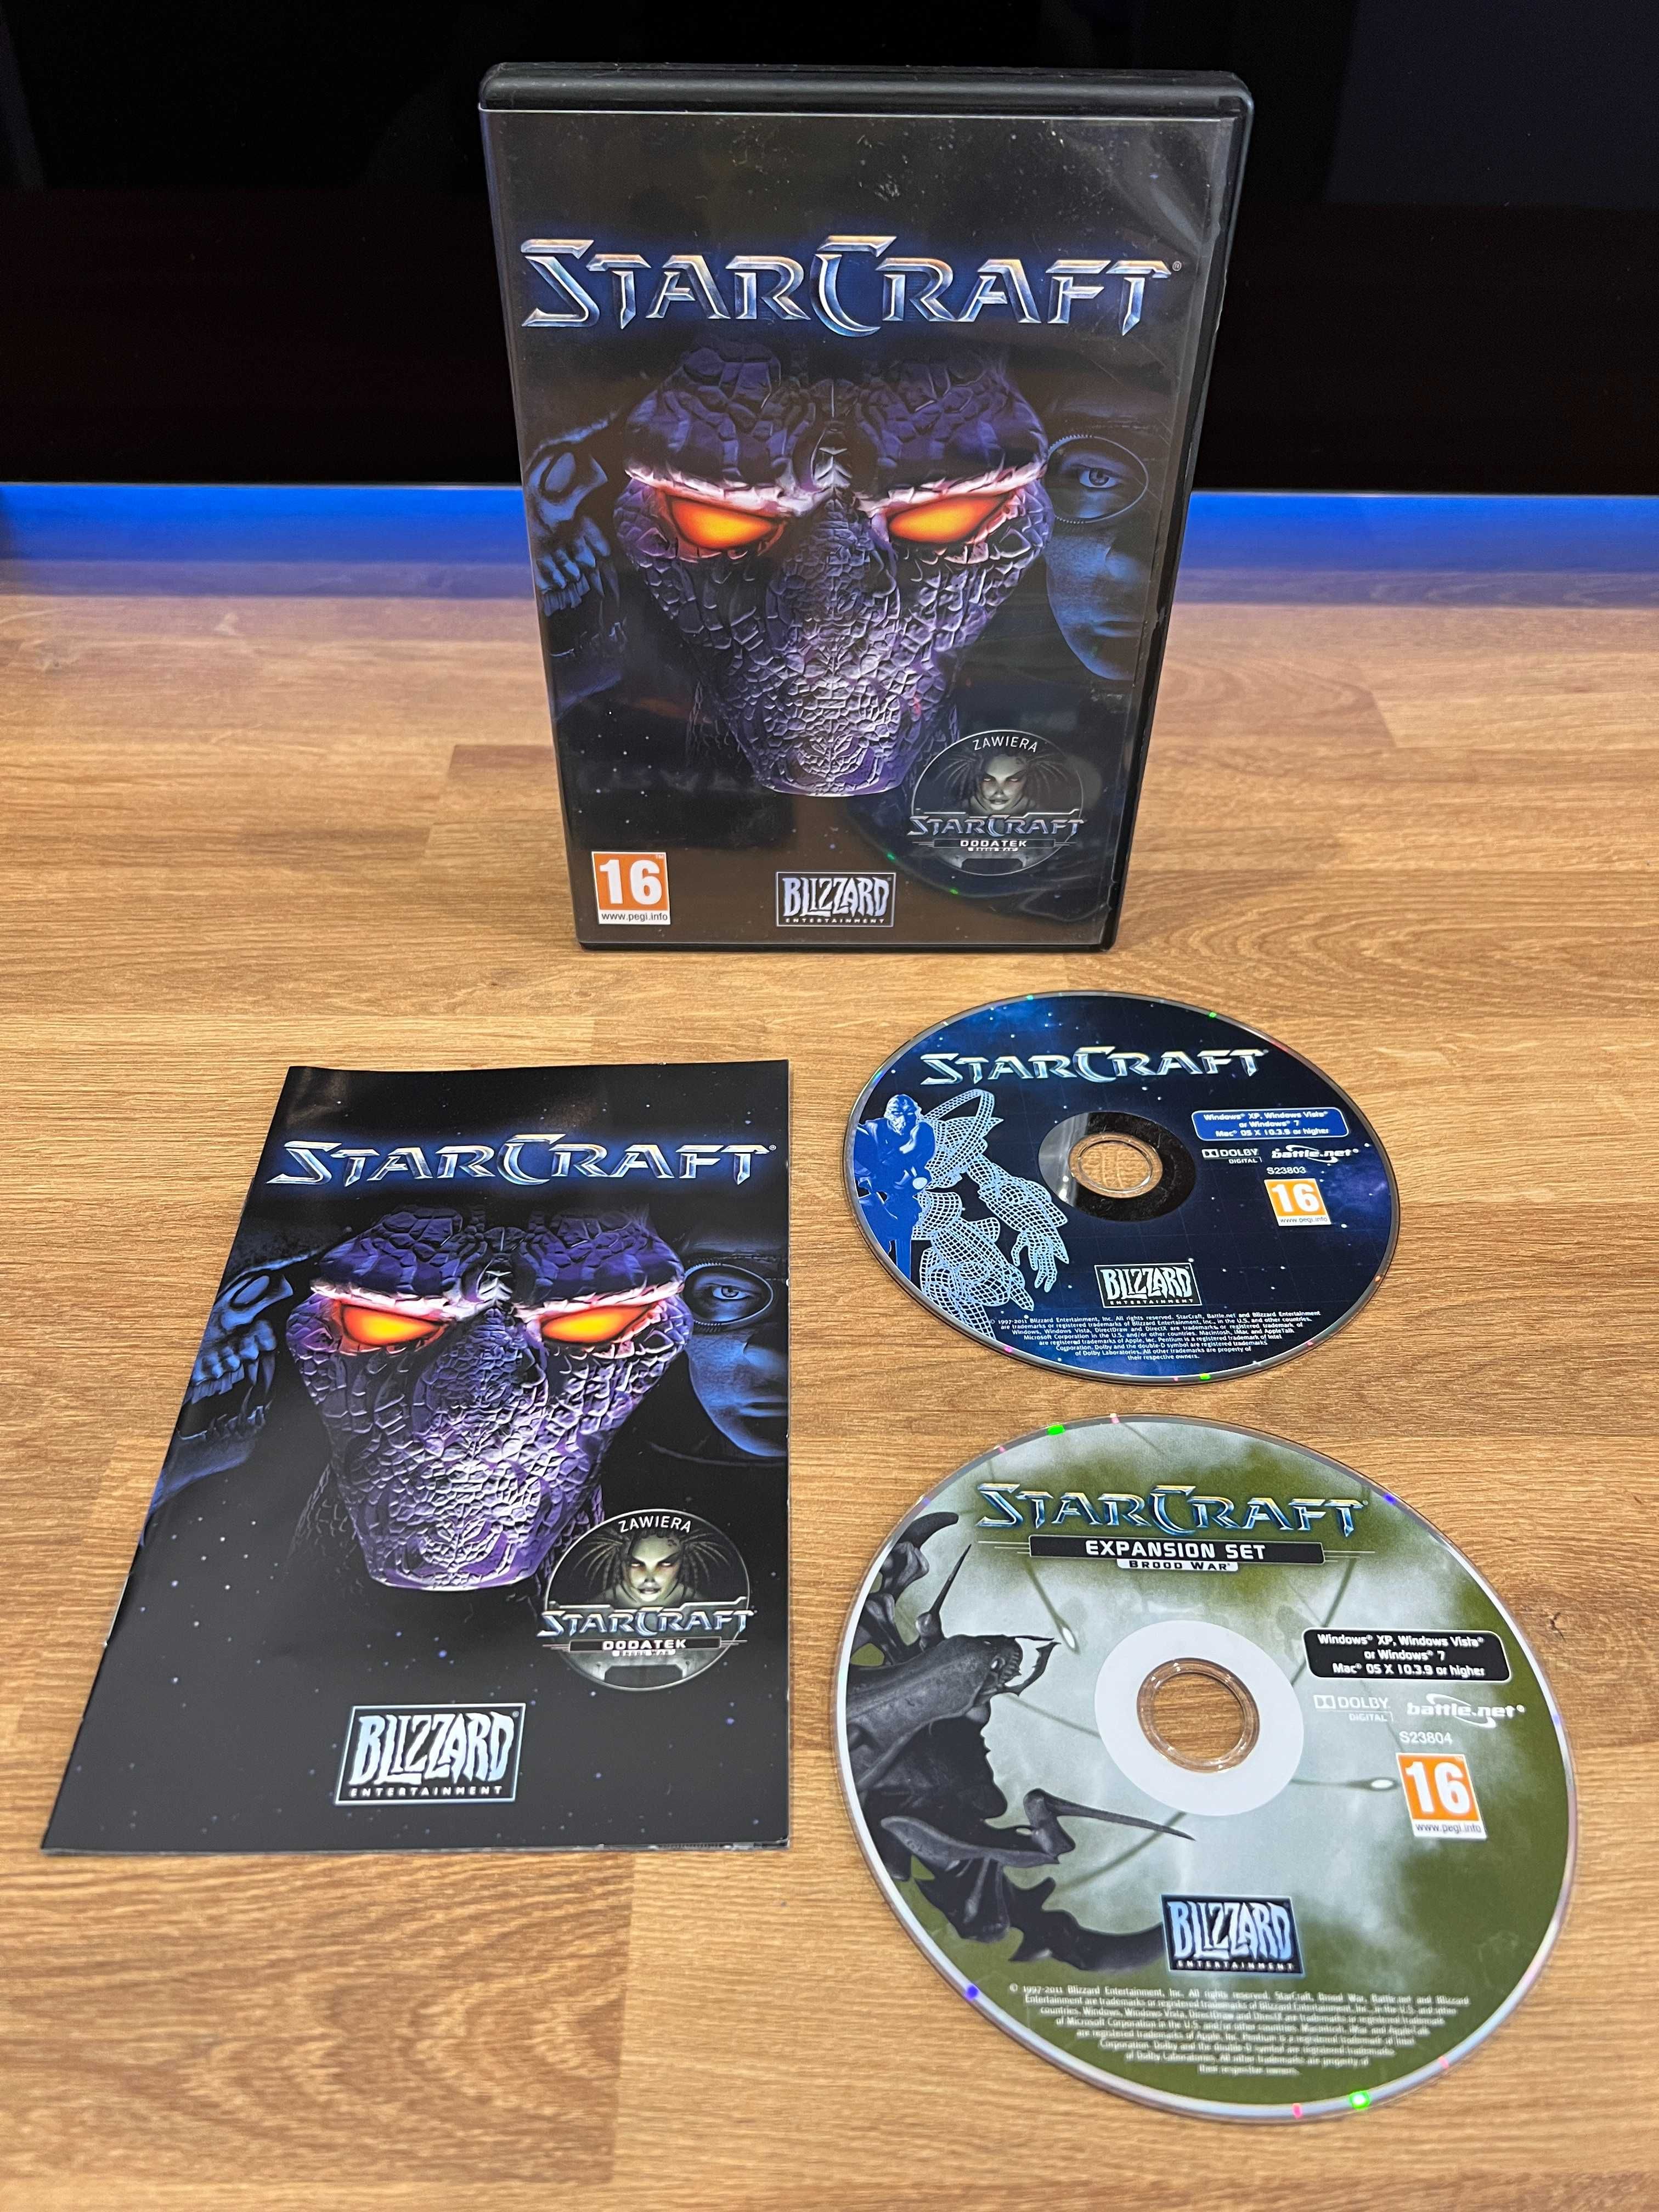 StarCraft + Brood War gra (PC PL 2011) DVD BOX kompletne wydanie